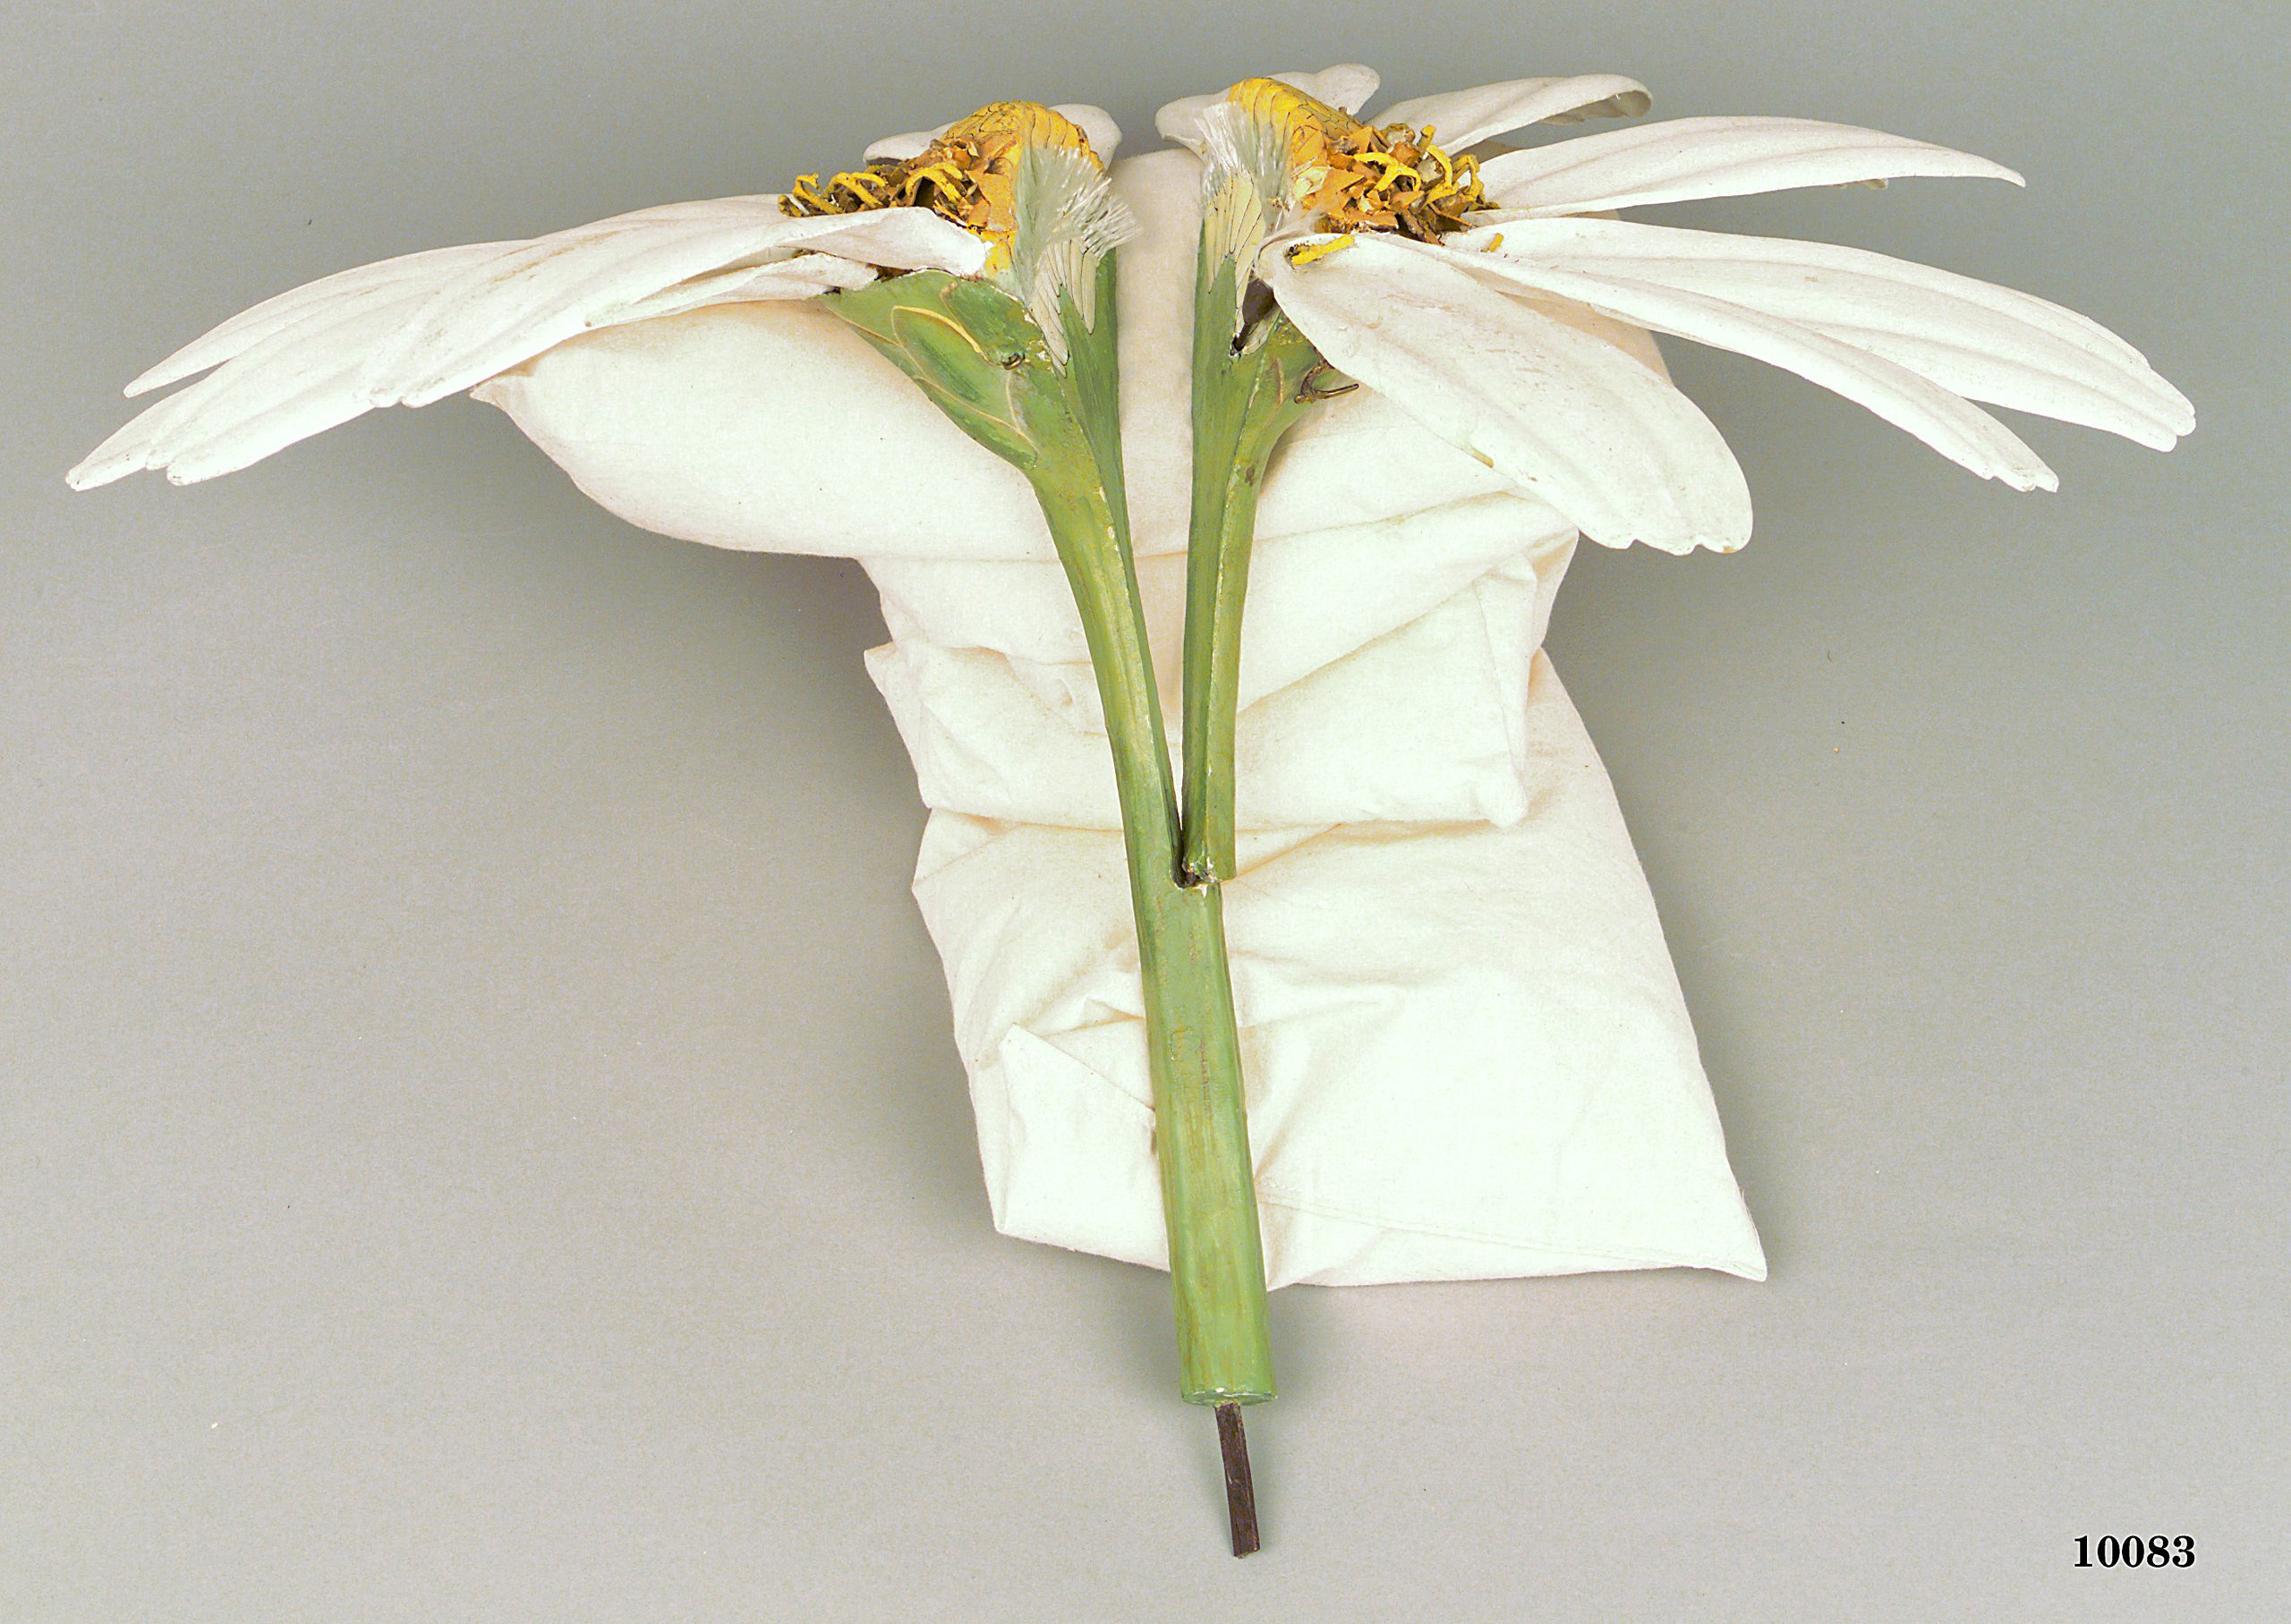 Model of Chrysanthemum flower